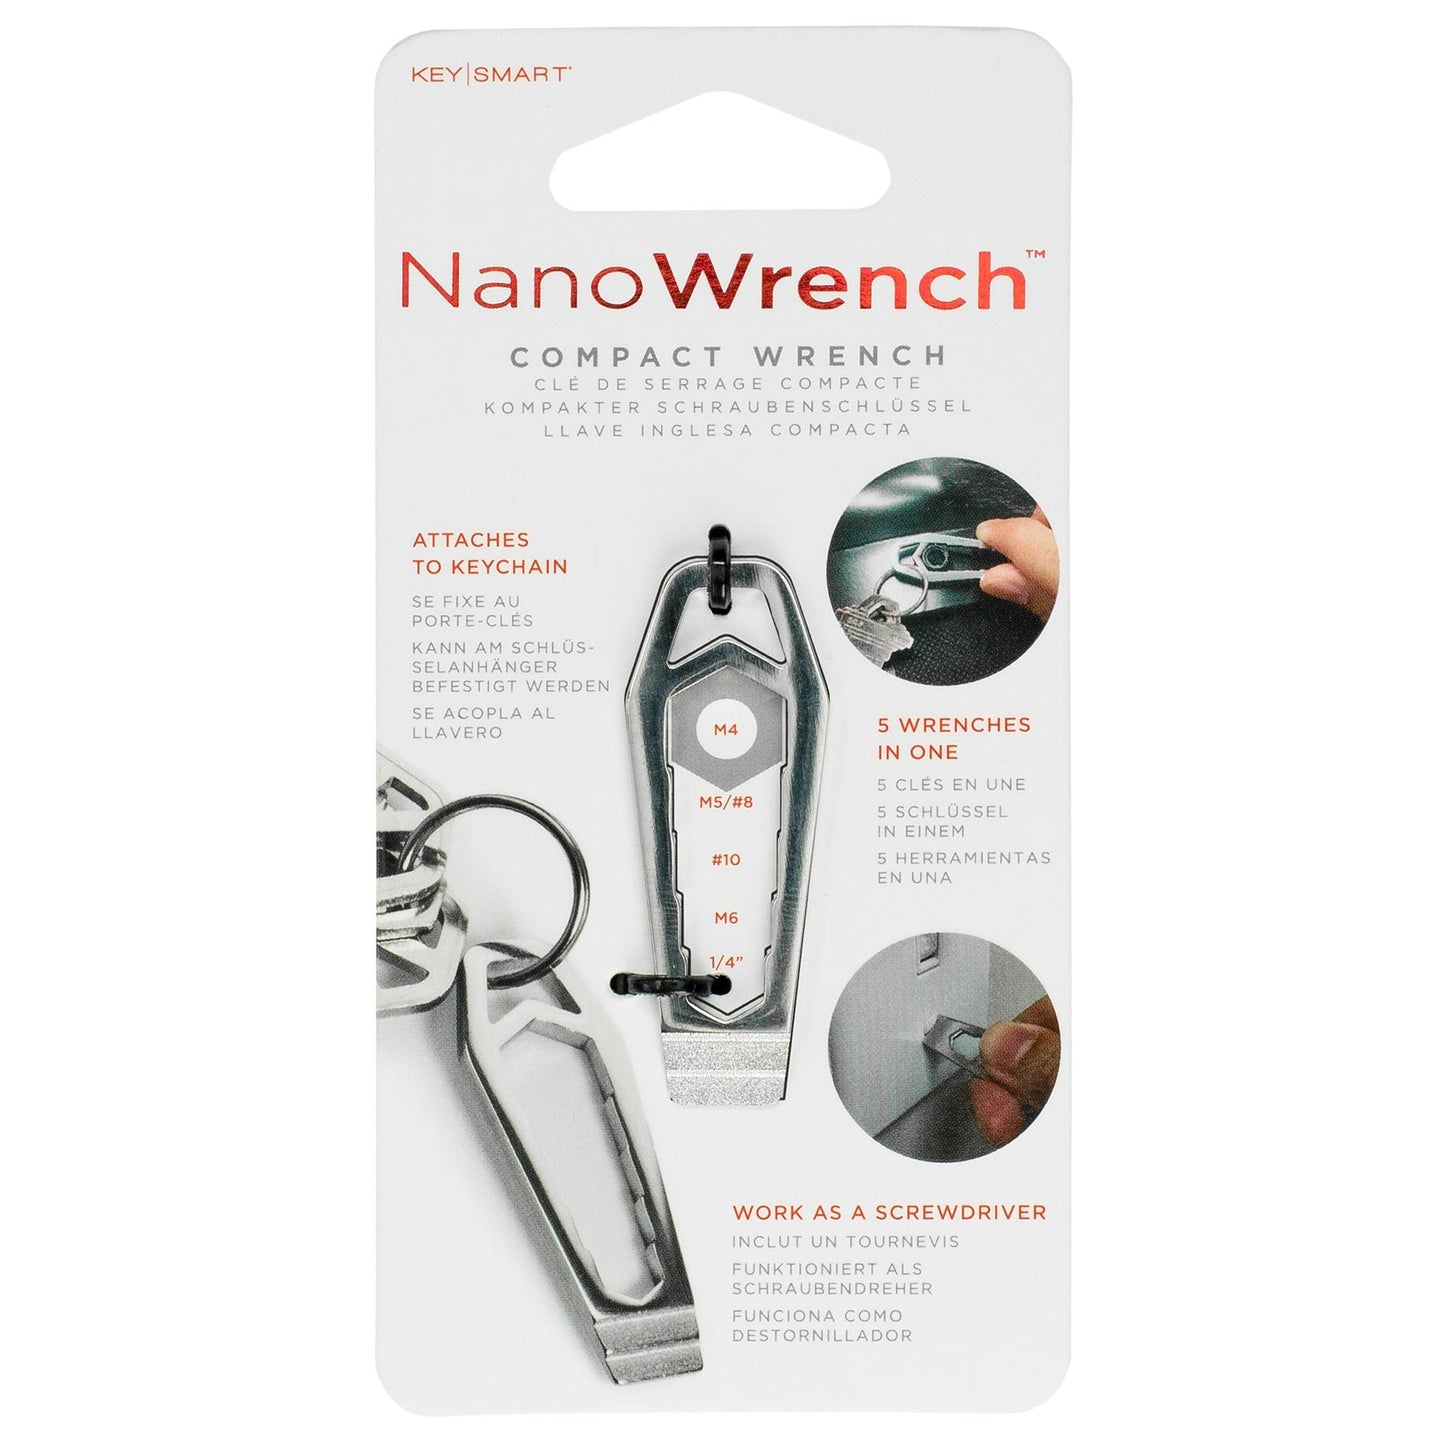 NanoWrench